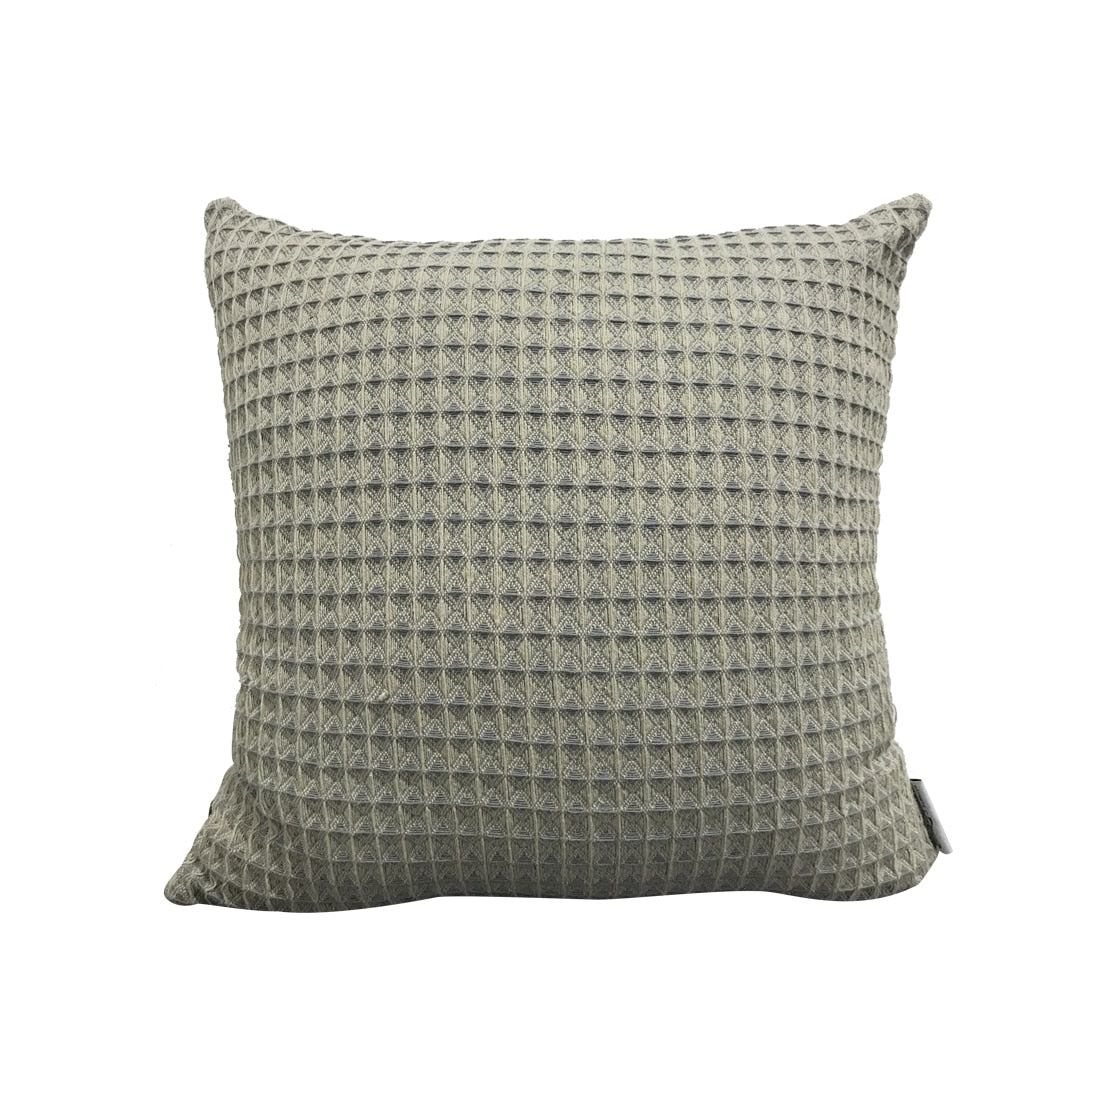 Grey Hand Woven Home Décor Cushion Cover 16x16